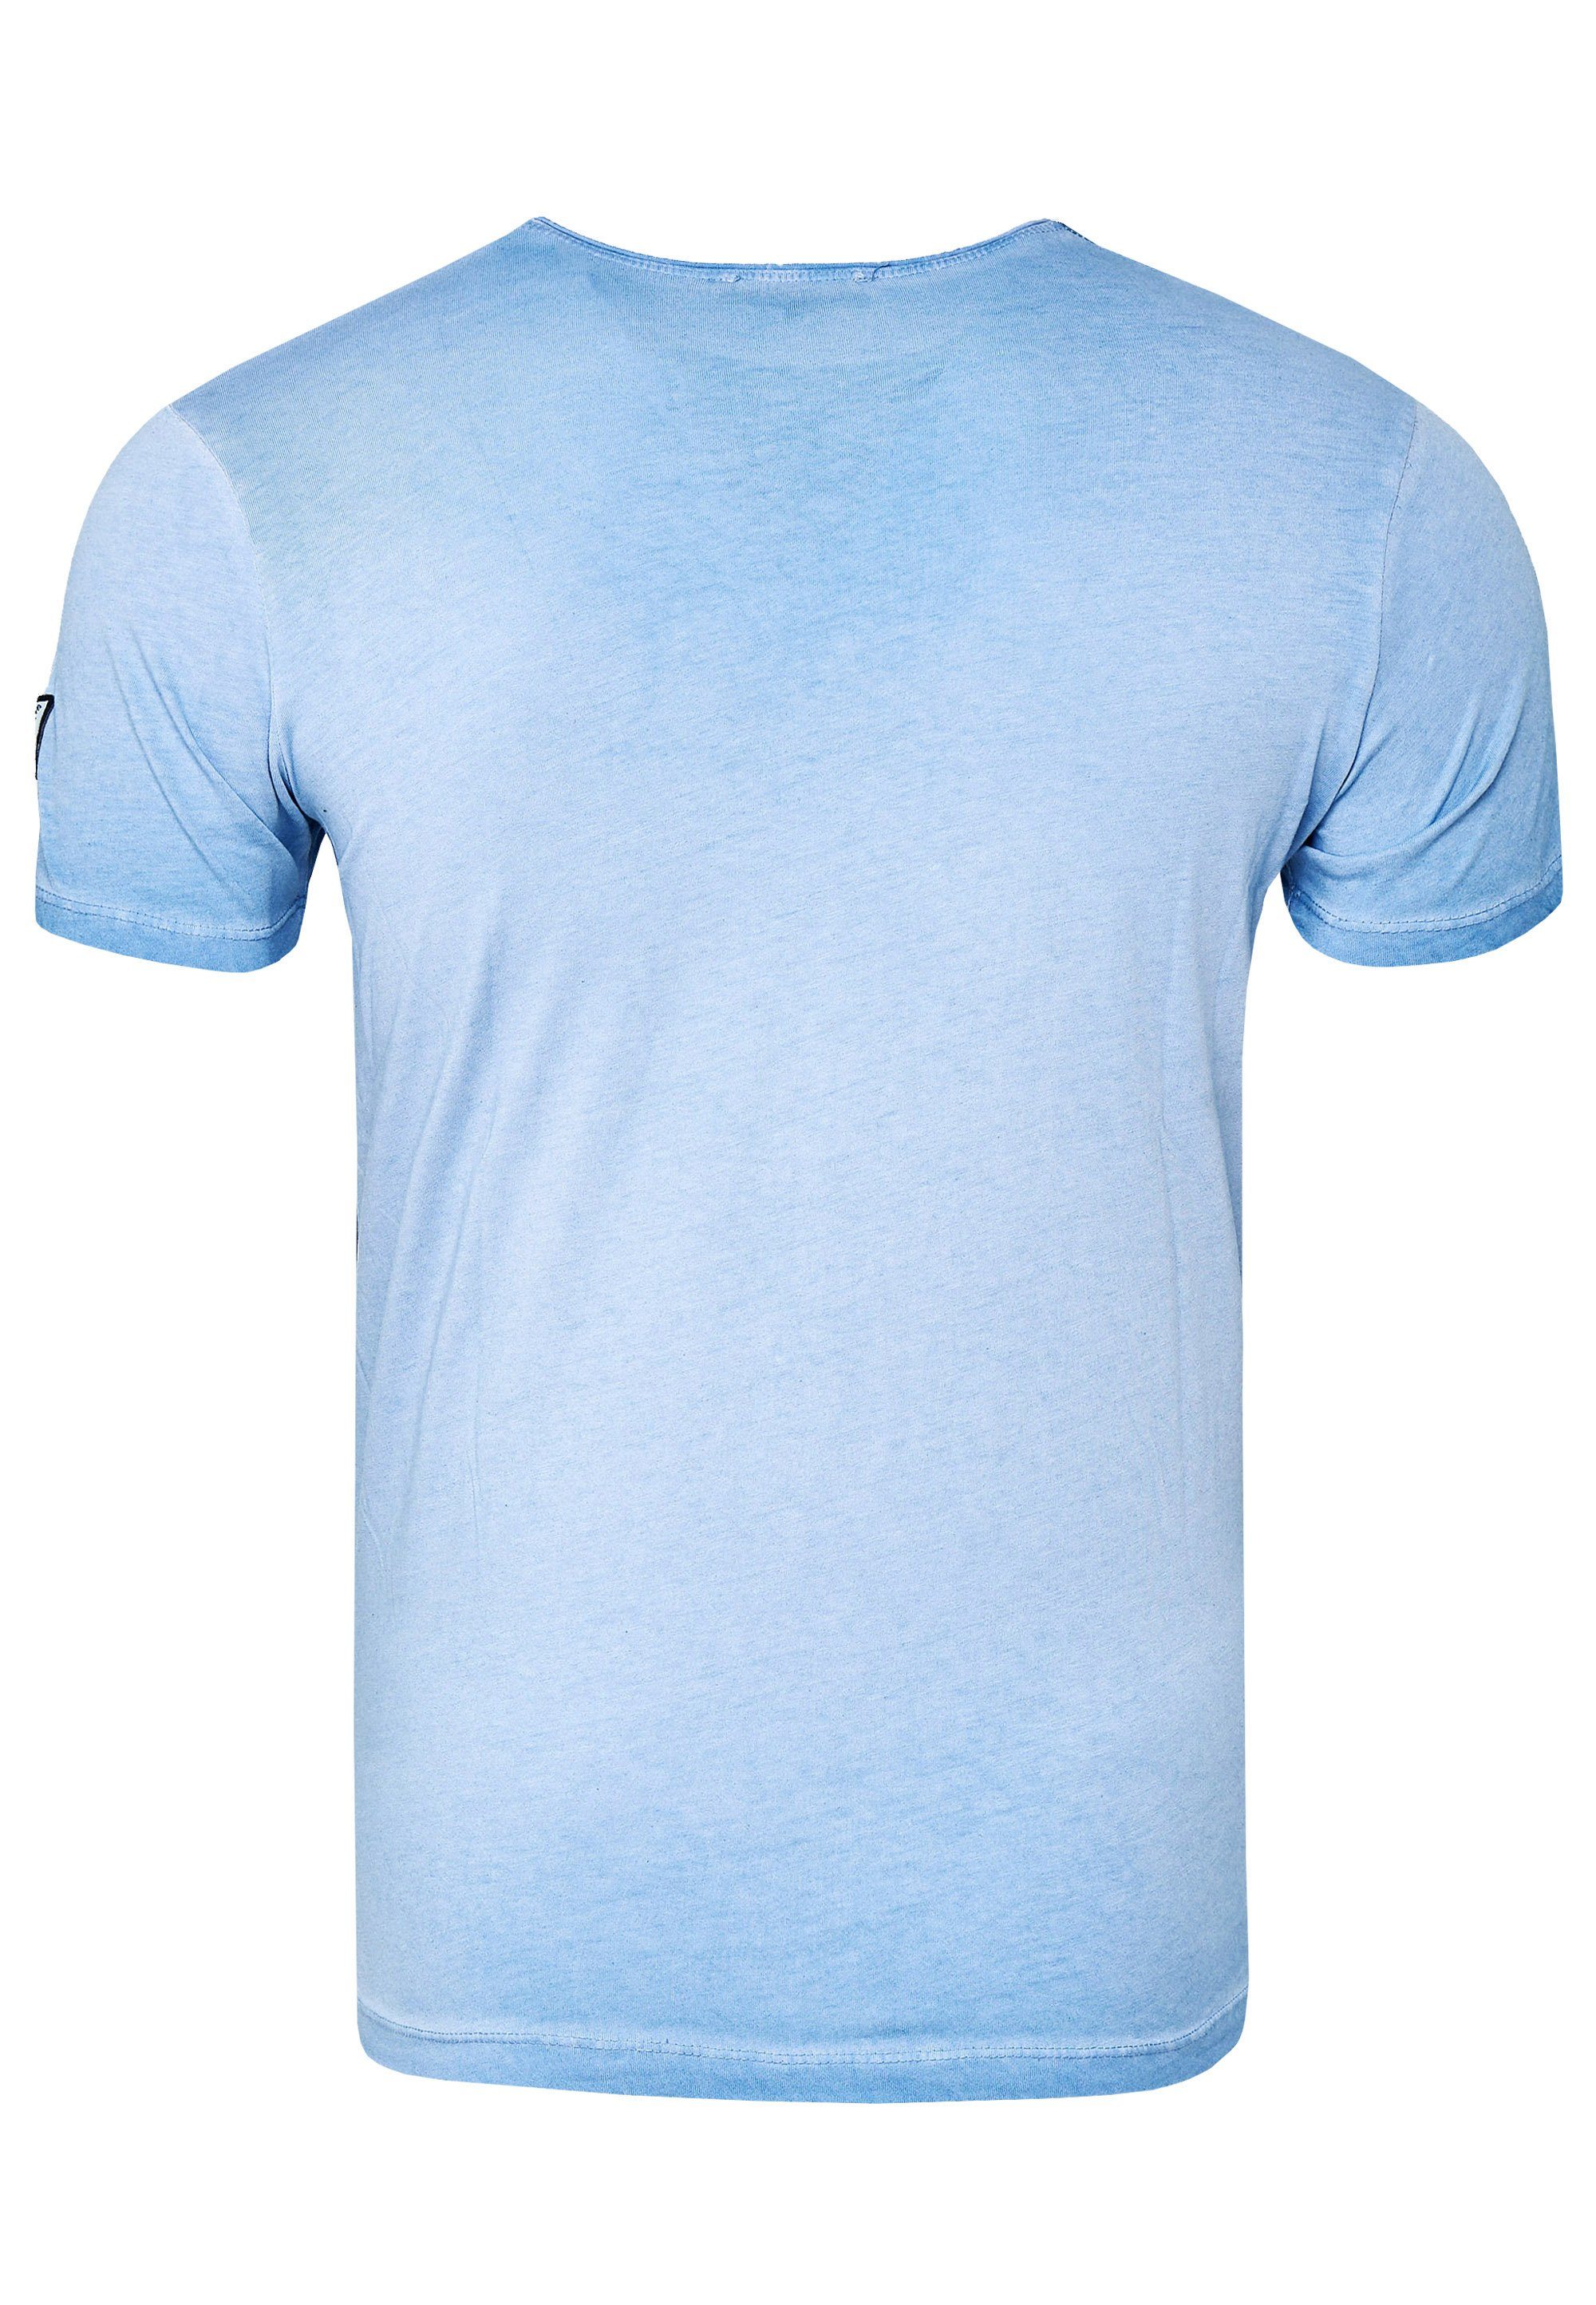 hellblau-weiß Adler-Print T-Shirt Rusty mit Neal